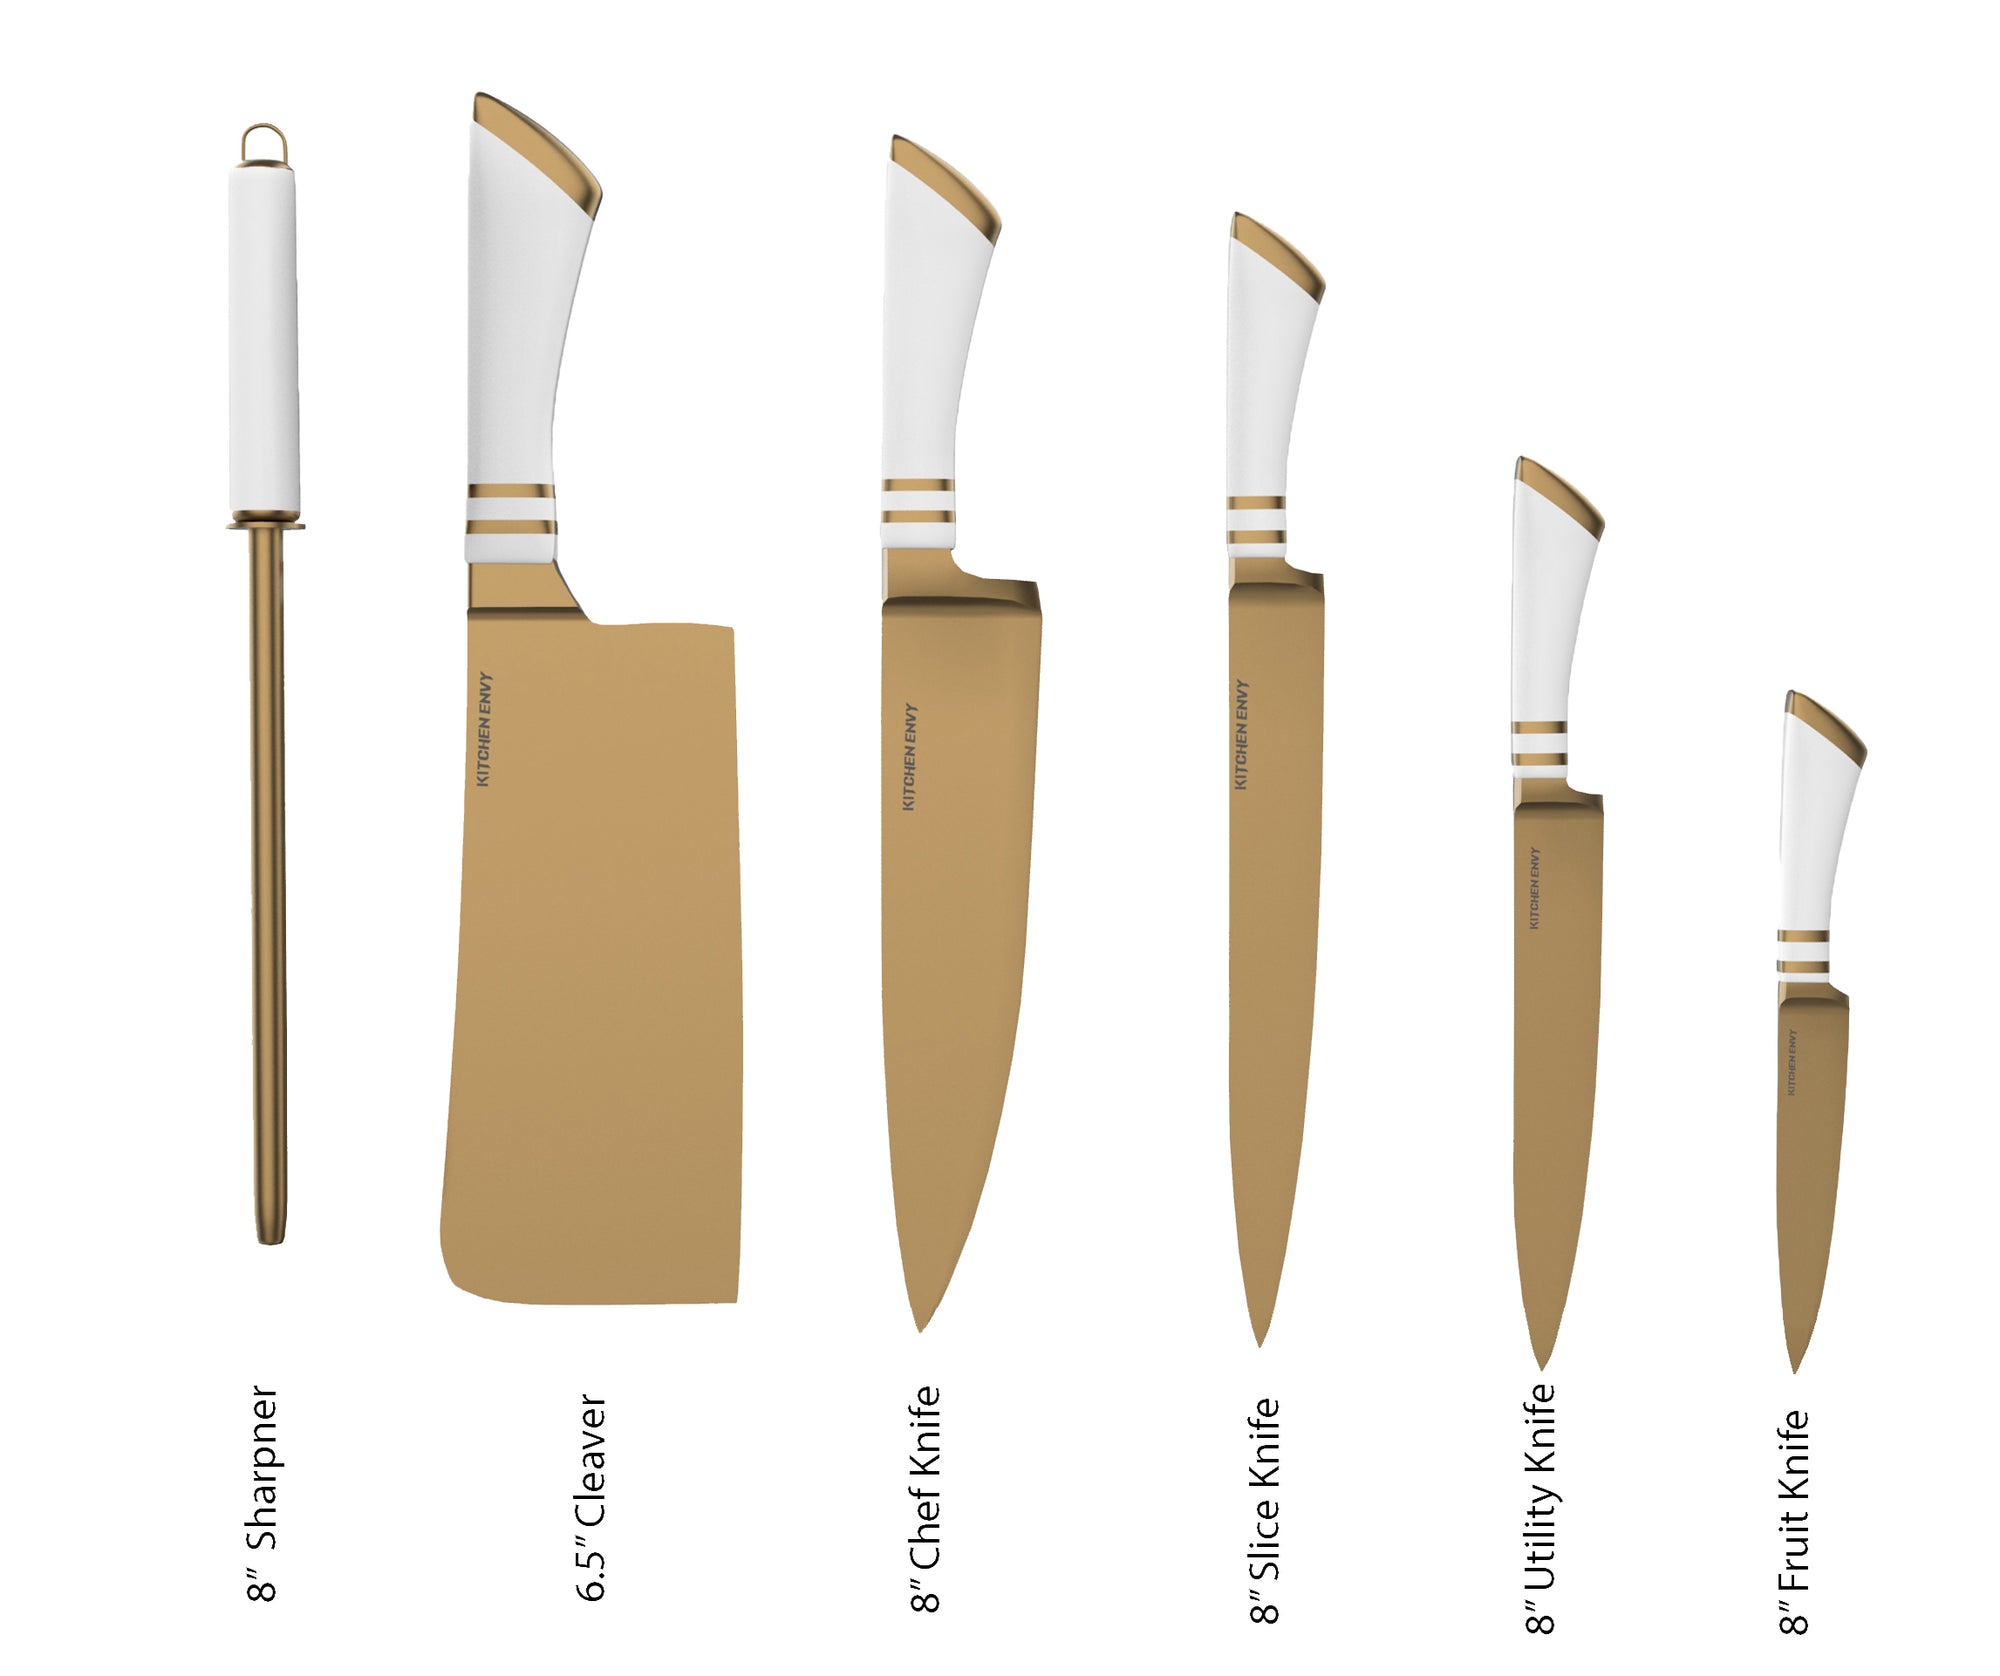  6 Piece Knife Set, 5 Beautiful Rose Gold Knives with Knife  Block, Sharp Kitchen Knife Sets, Multiple Size, All Purpose Kitchen Knives